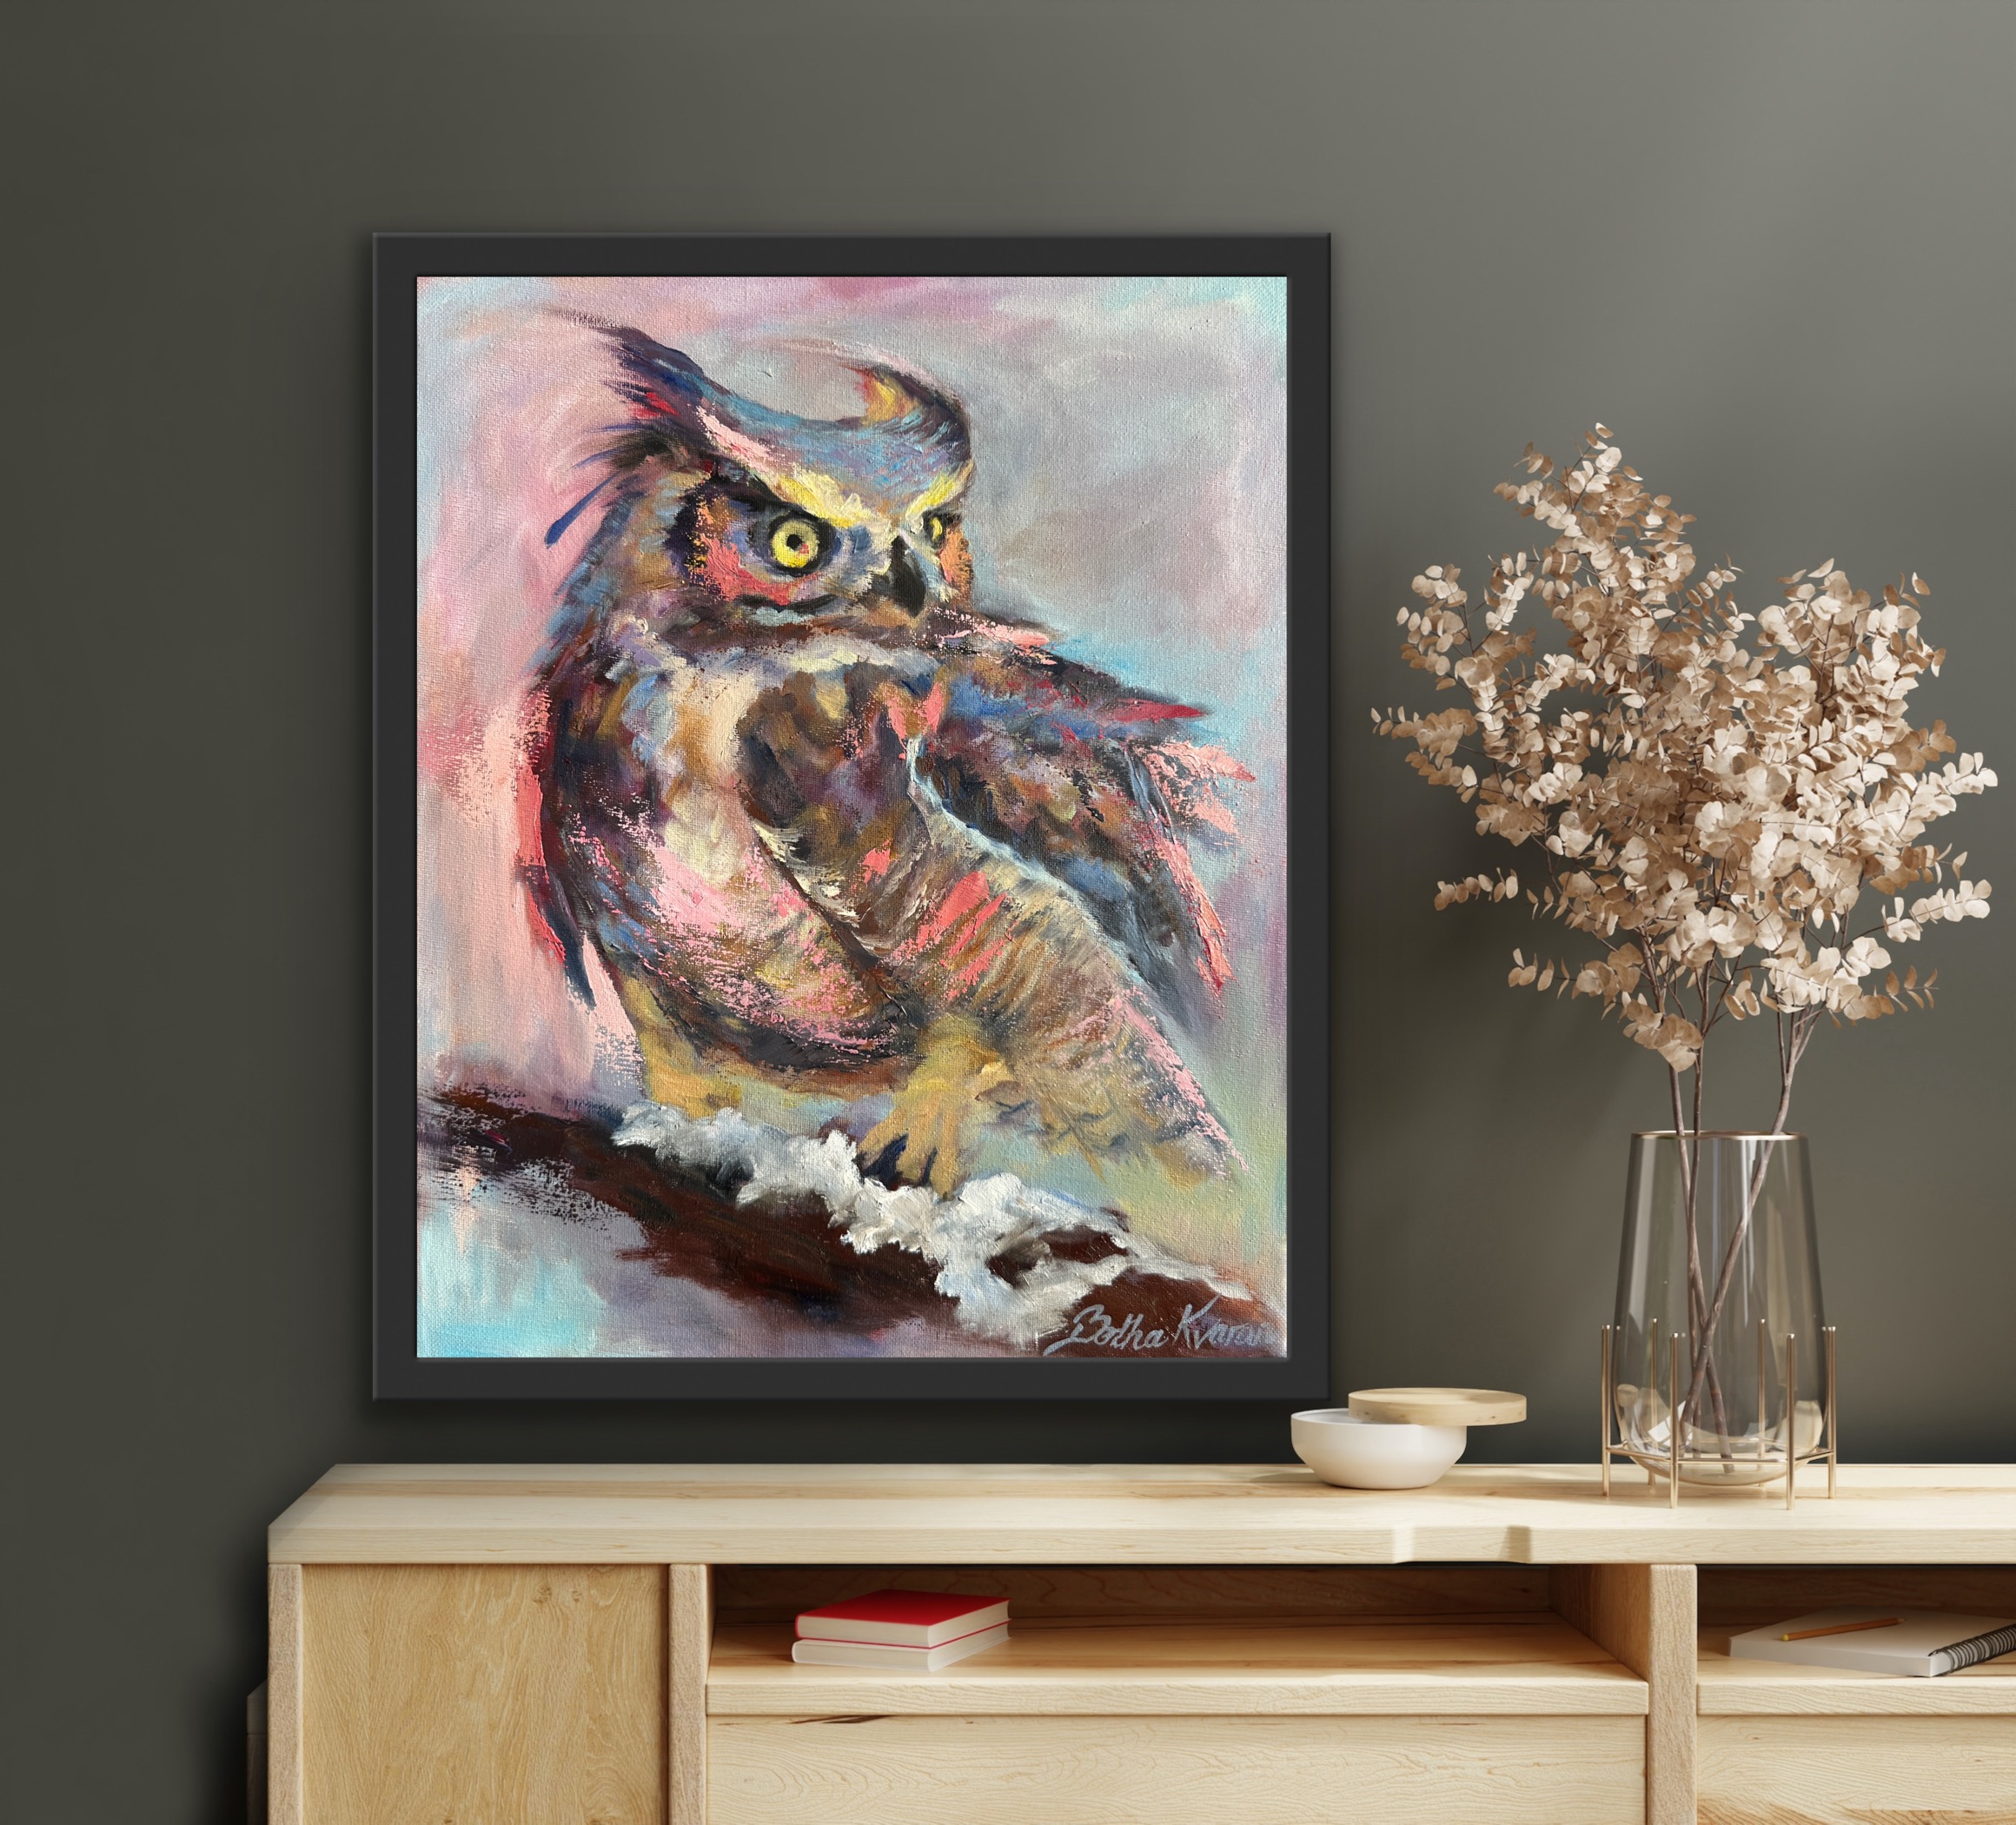 The Oily Owl, an oil painting of an owl, by Bertha Kvaran